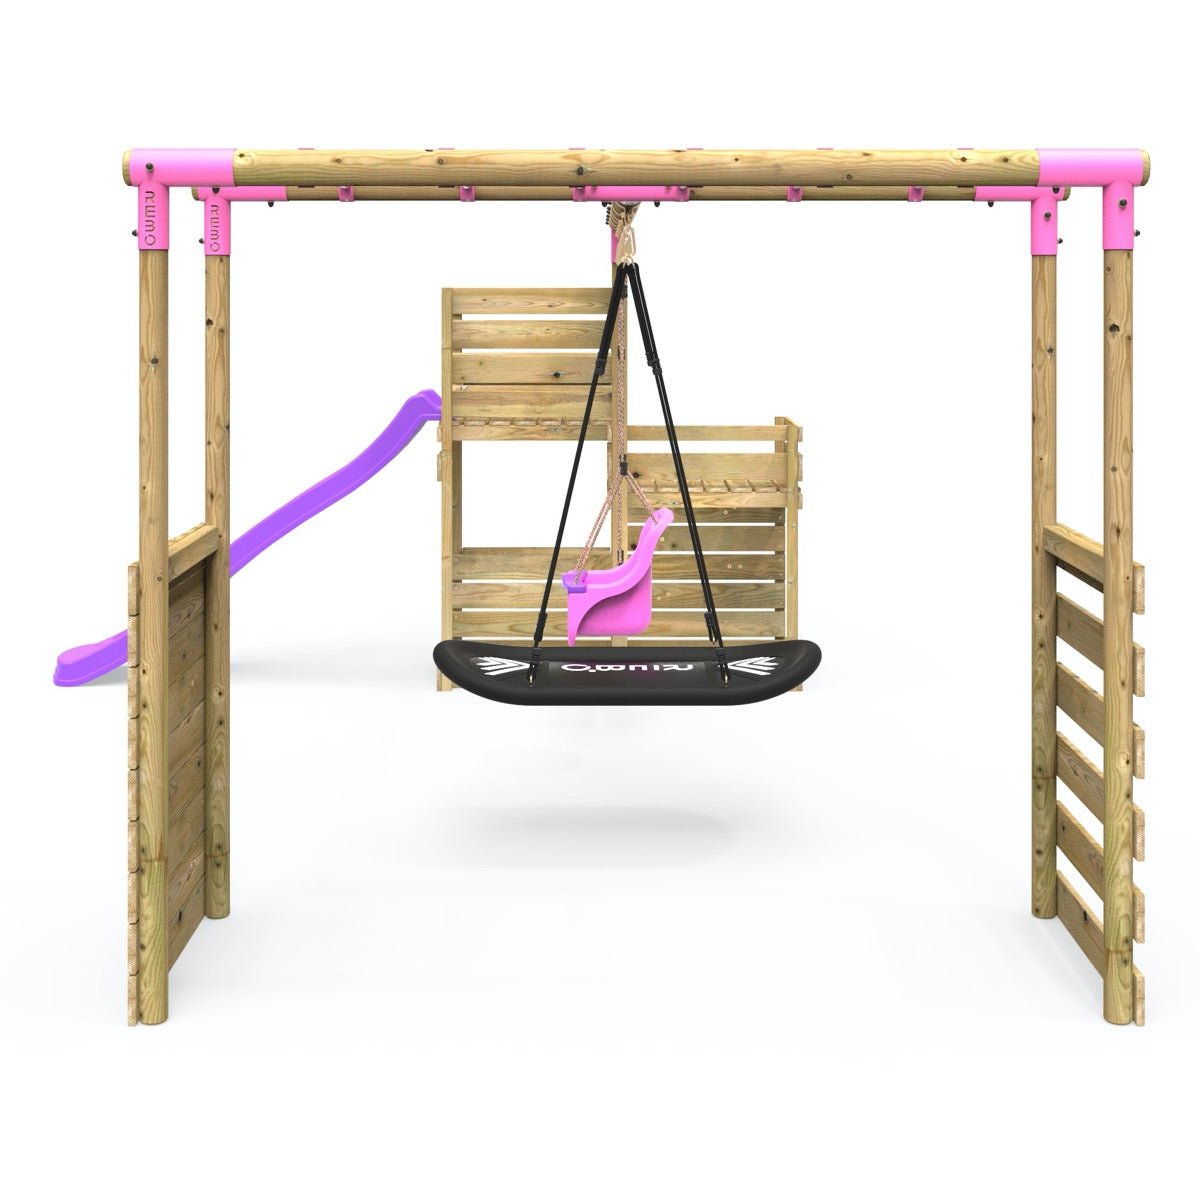 Rebo Wooden Swing Set plus Deluxe Deck, 8FT Slide & Monkey Bars - Halley Pink